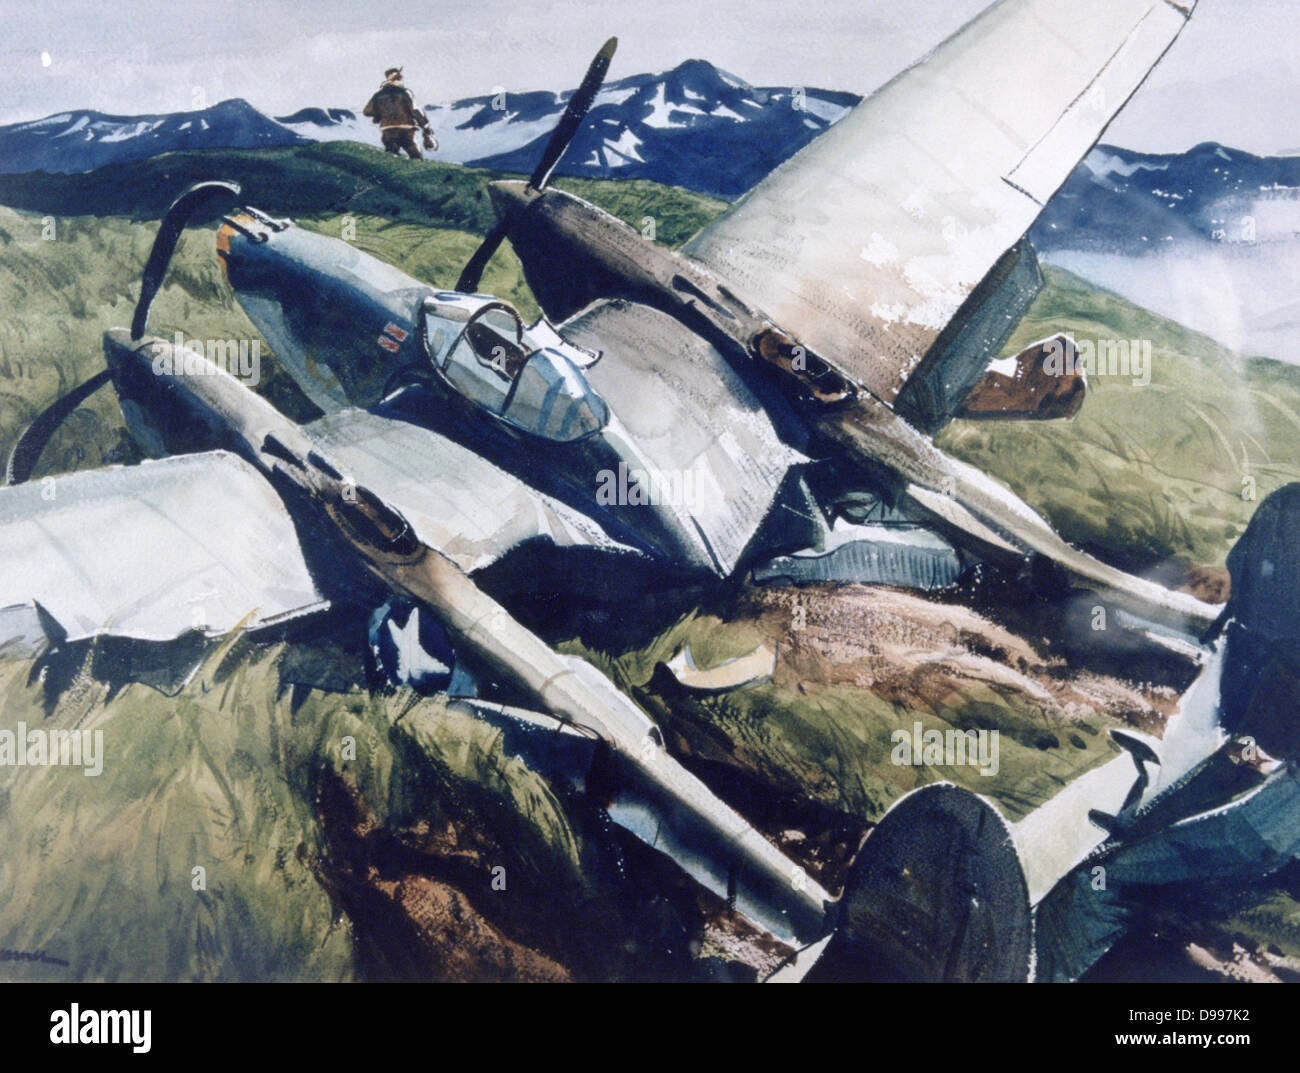 Weltkrieg 1939-1945: 'Crash - Aleutians', Ogden Pleissner (1945-1983), US-amerikanischer Maler. Aleutians Inseln Kampagne, Alaska, 1942-1943, Japanisch besiegt. US-Armee Fotografische Agentur. Militär, Fliegen, Luftwaffe, Stockfoto